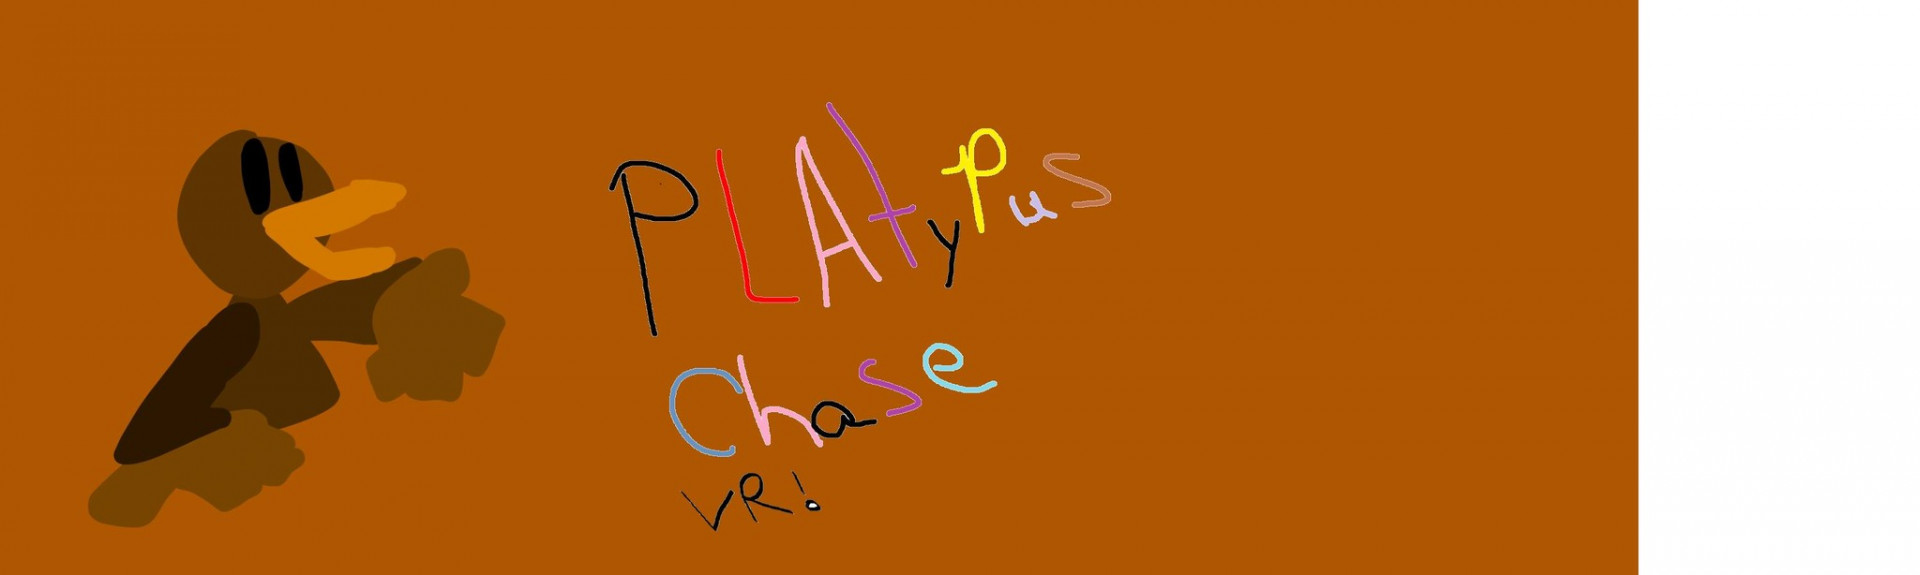 Platypus Chase